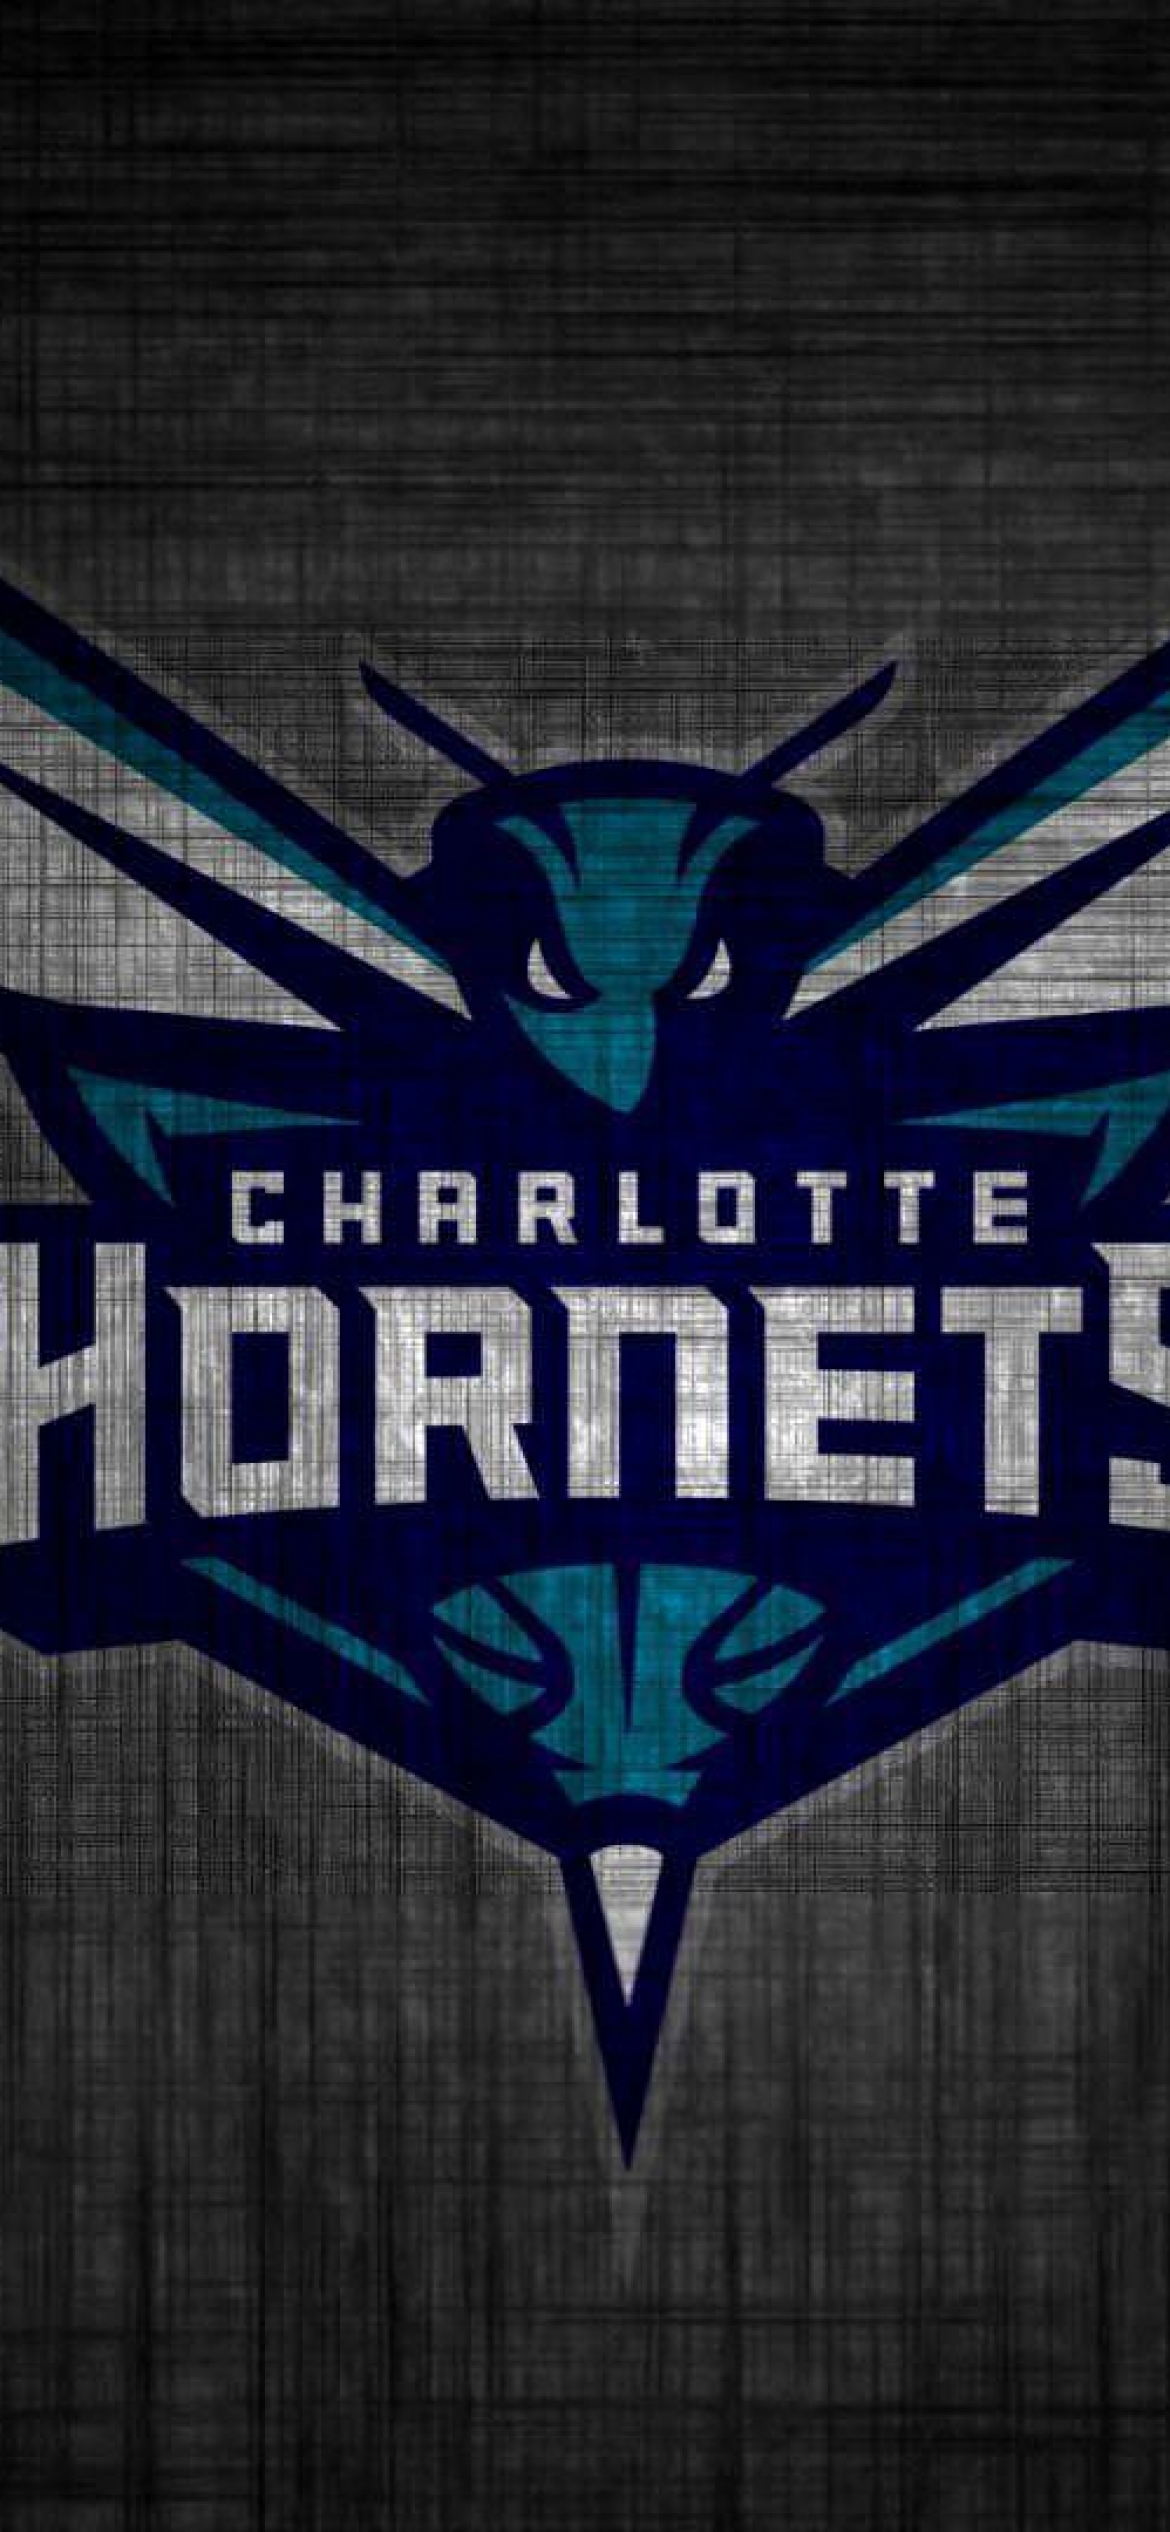 Charlotte Hornets background courtesy of BringBackTheBuzz hornets  charlottehornets bringbackthebuzz  Charlotte hornets Charlotte hornets  logo Hornet